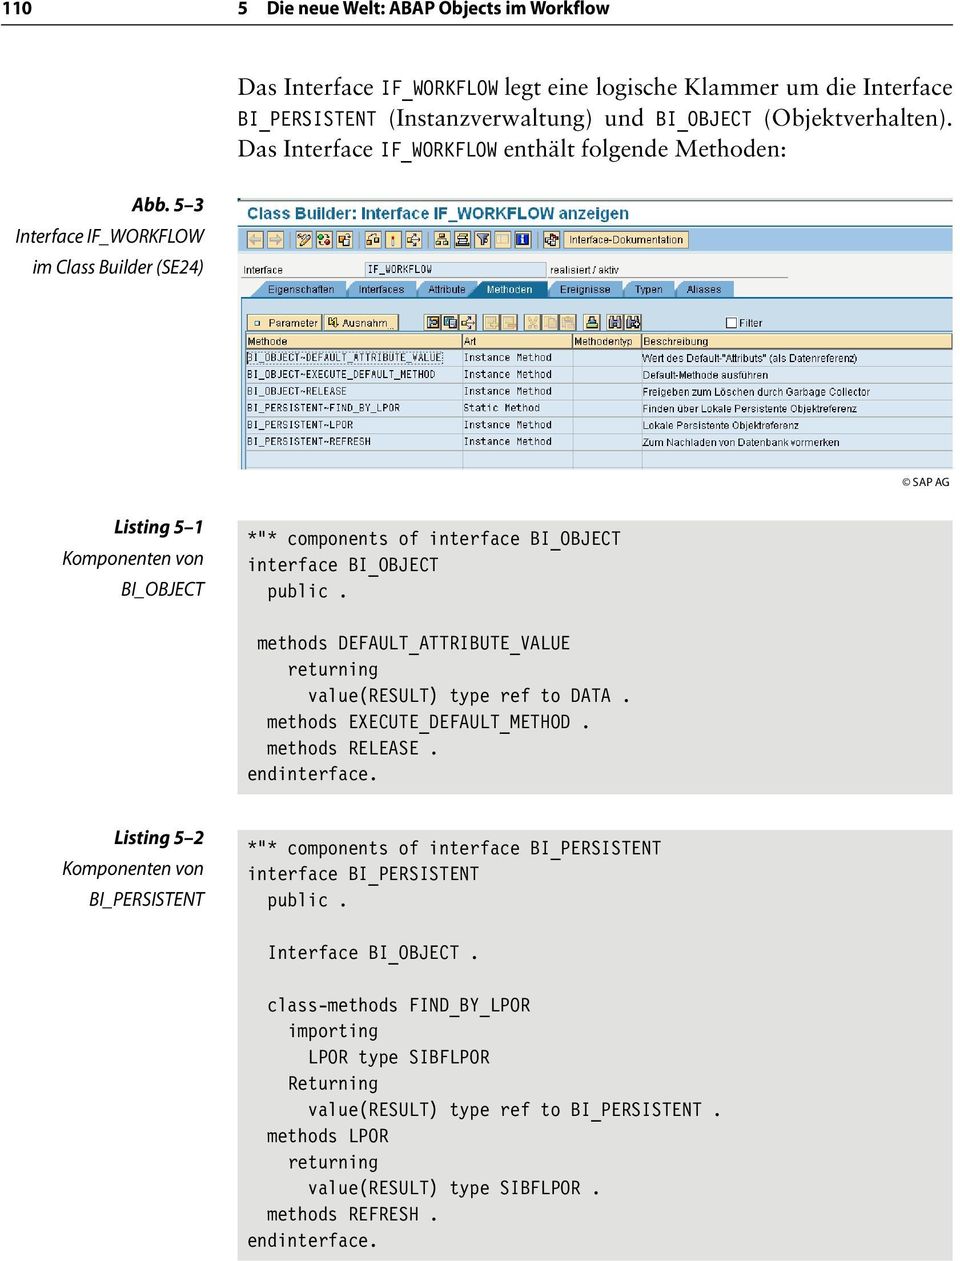 5 3 Interface IF_WORKFLOW im Class Builder (SE24) SAP AG Listing 5 1 Komponenten von BI_OBJECT *"* components of interface BI_OBJECT interface BI_OBJECT public.